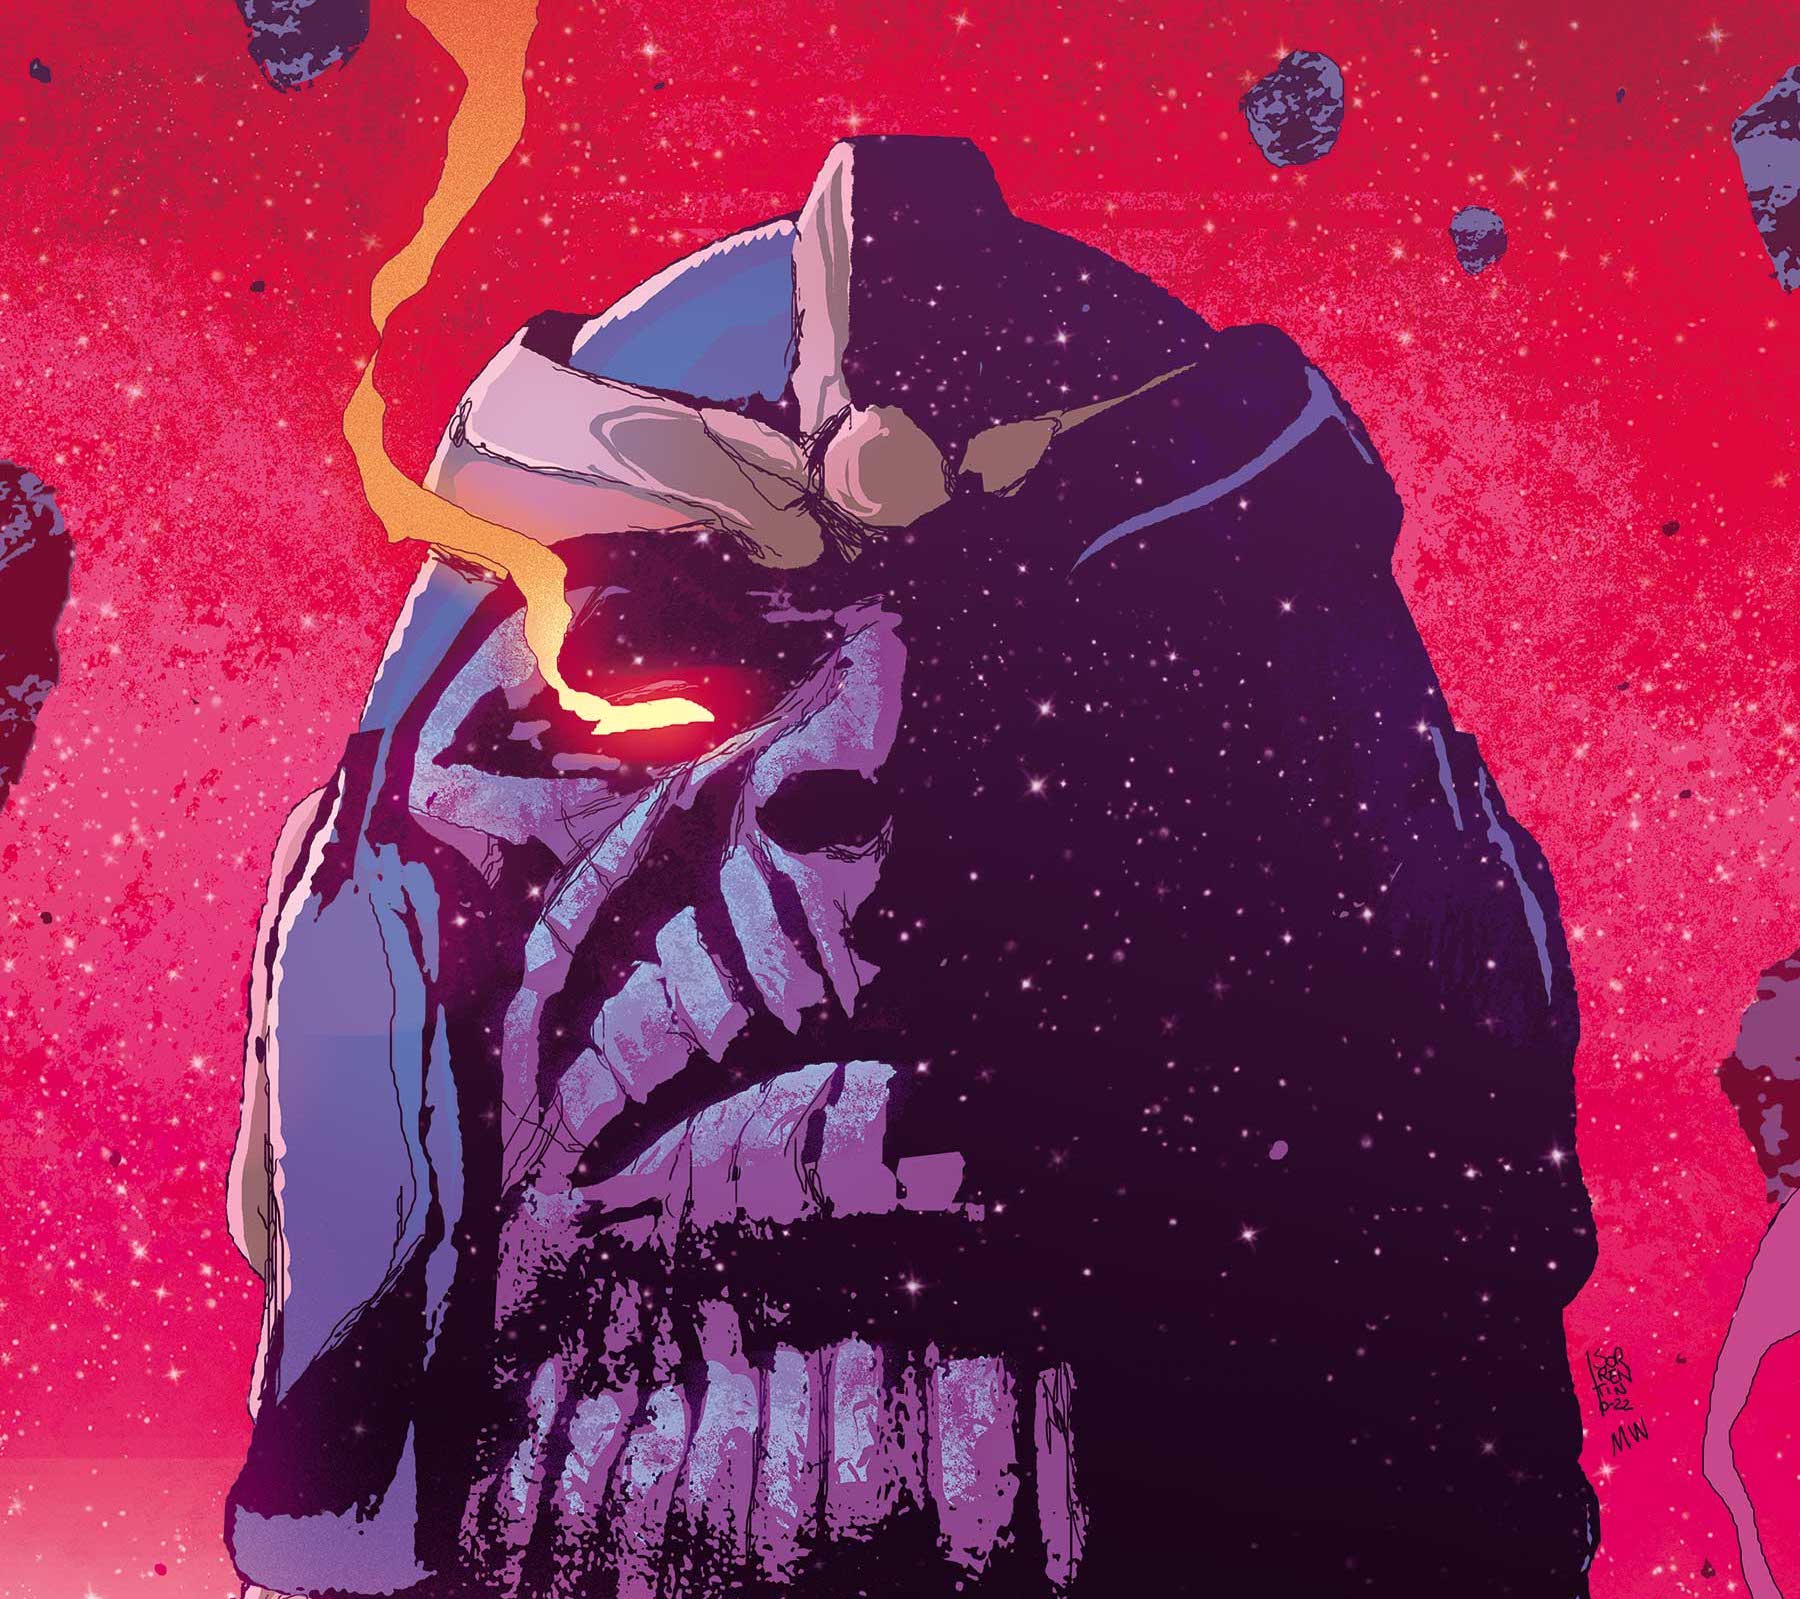 'Thanos: Death Notes' #1 to explore Mad Titan's past